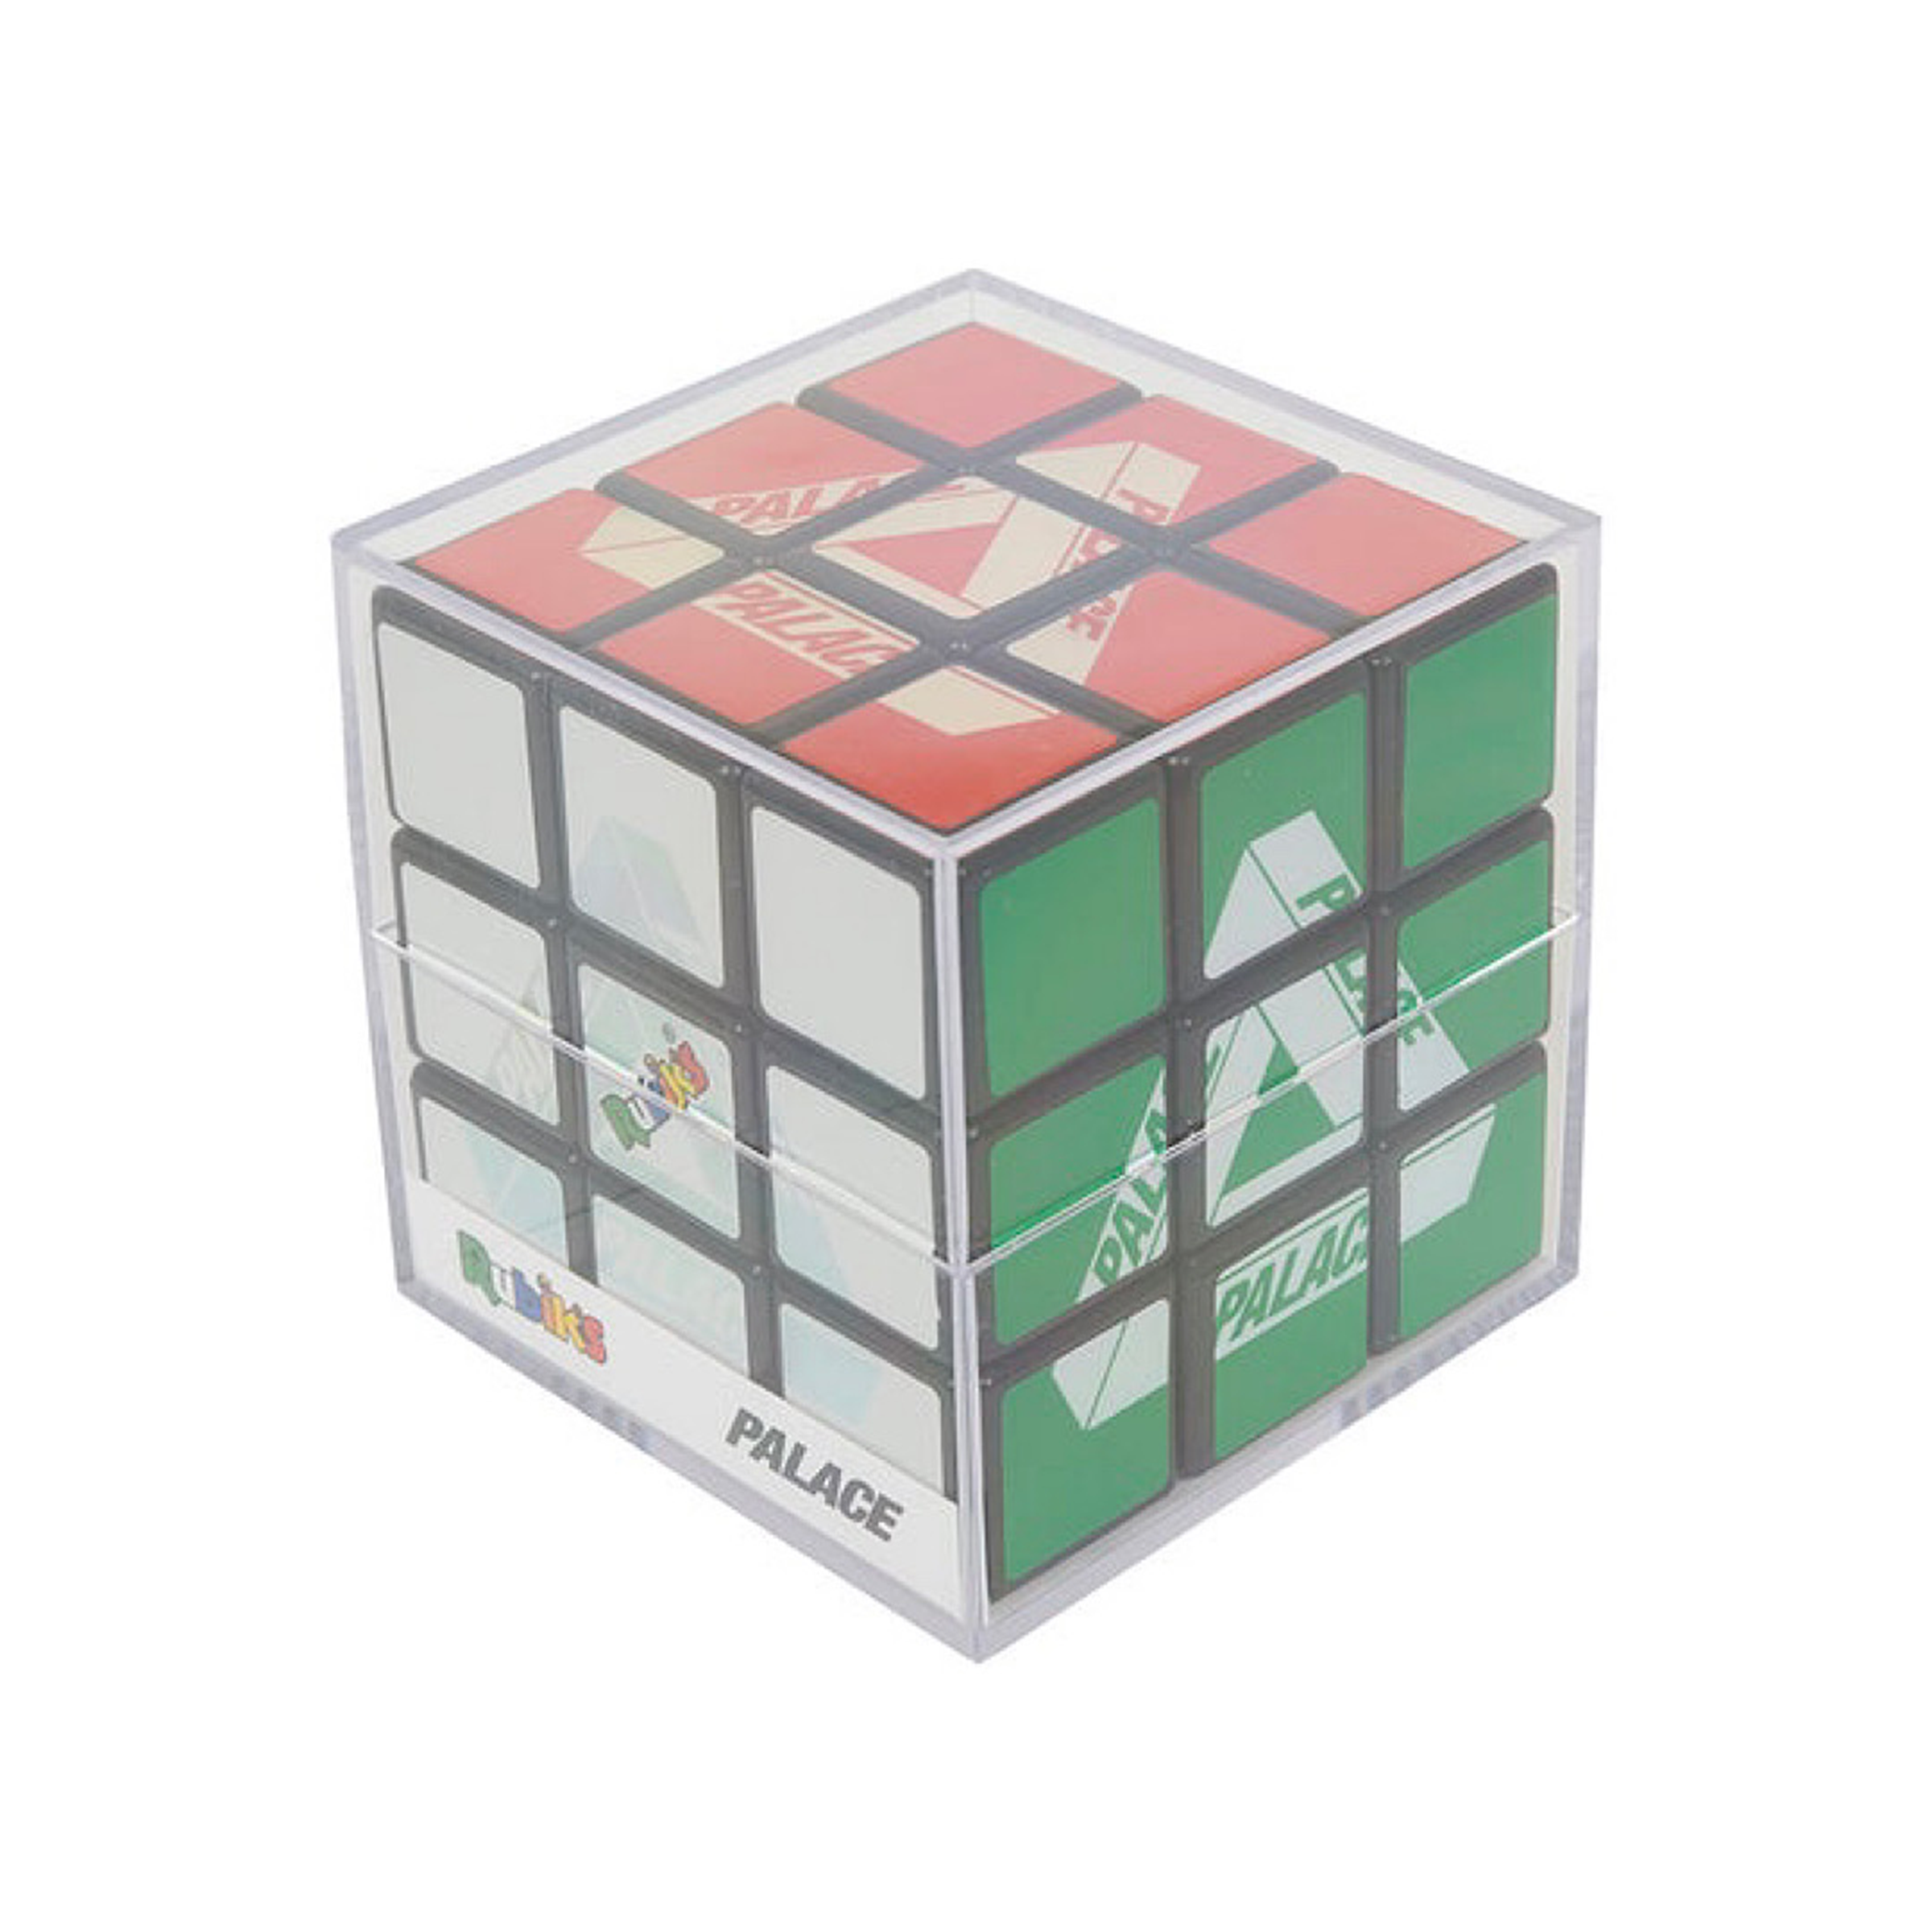 Palace x Rubiks Cube